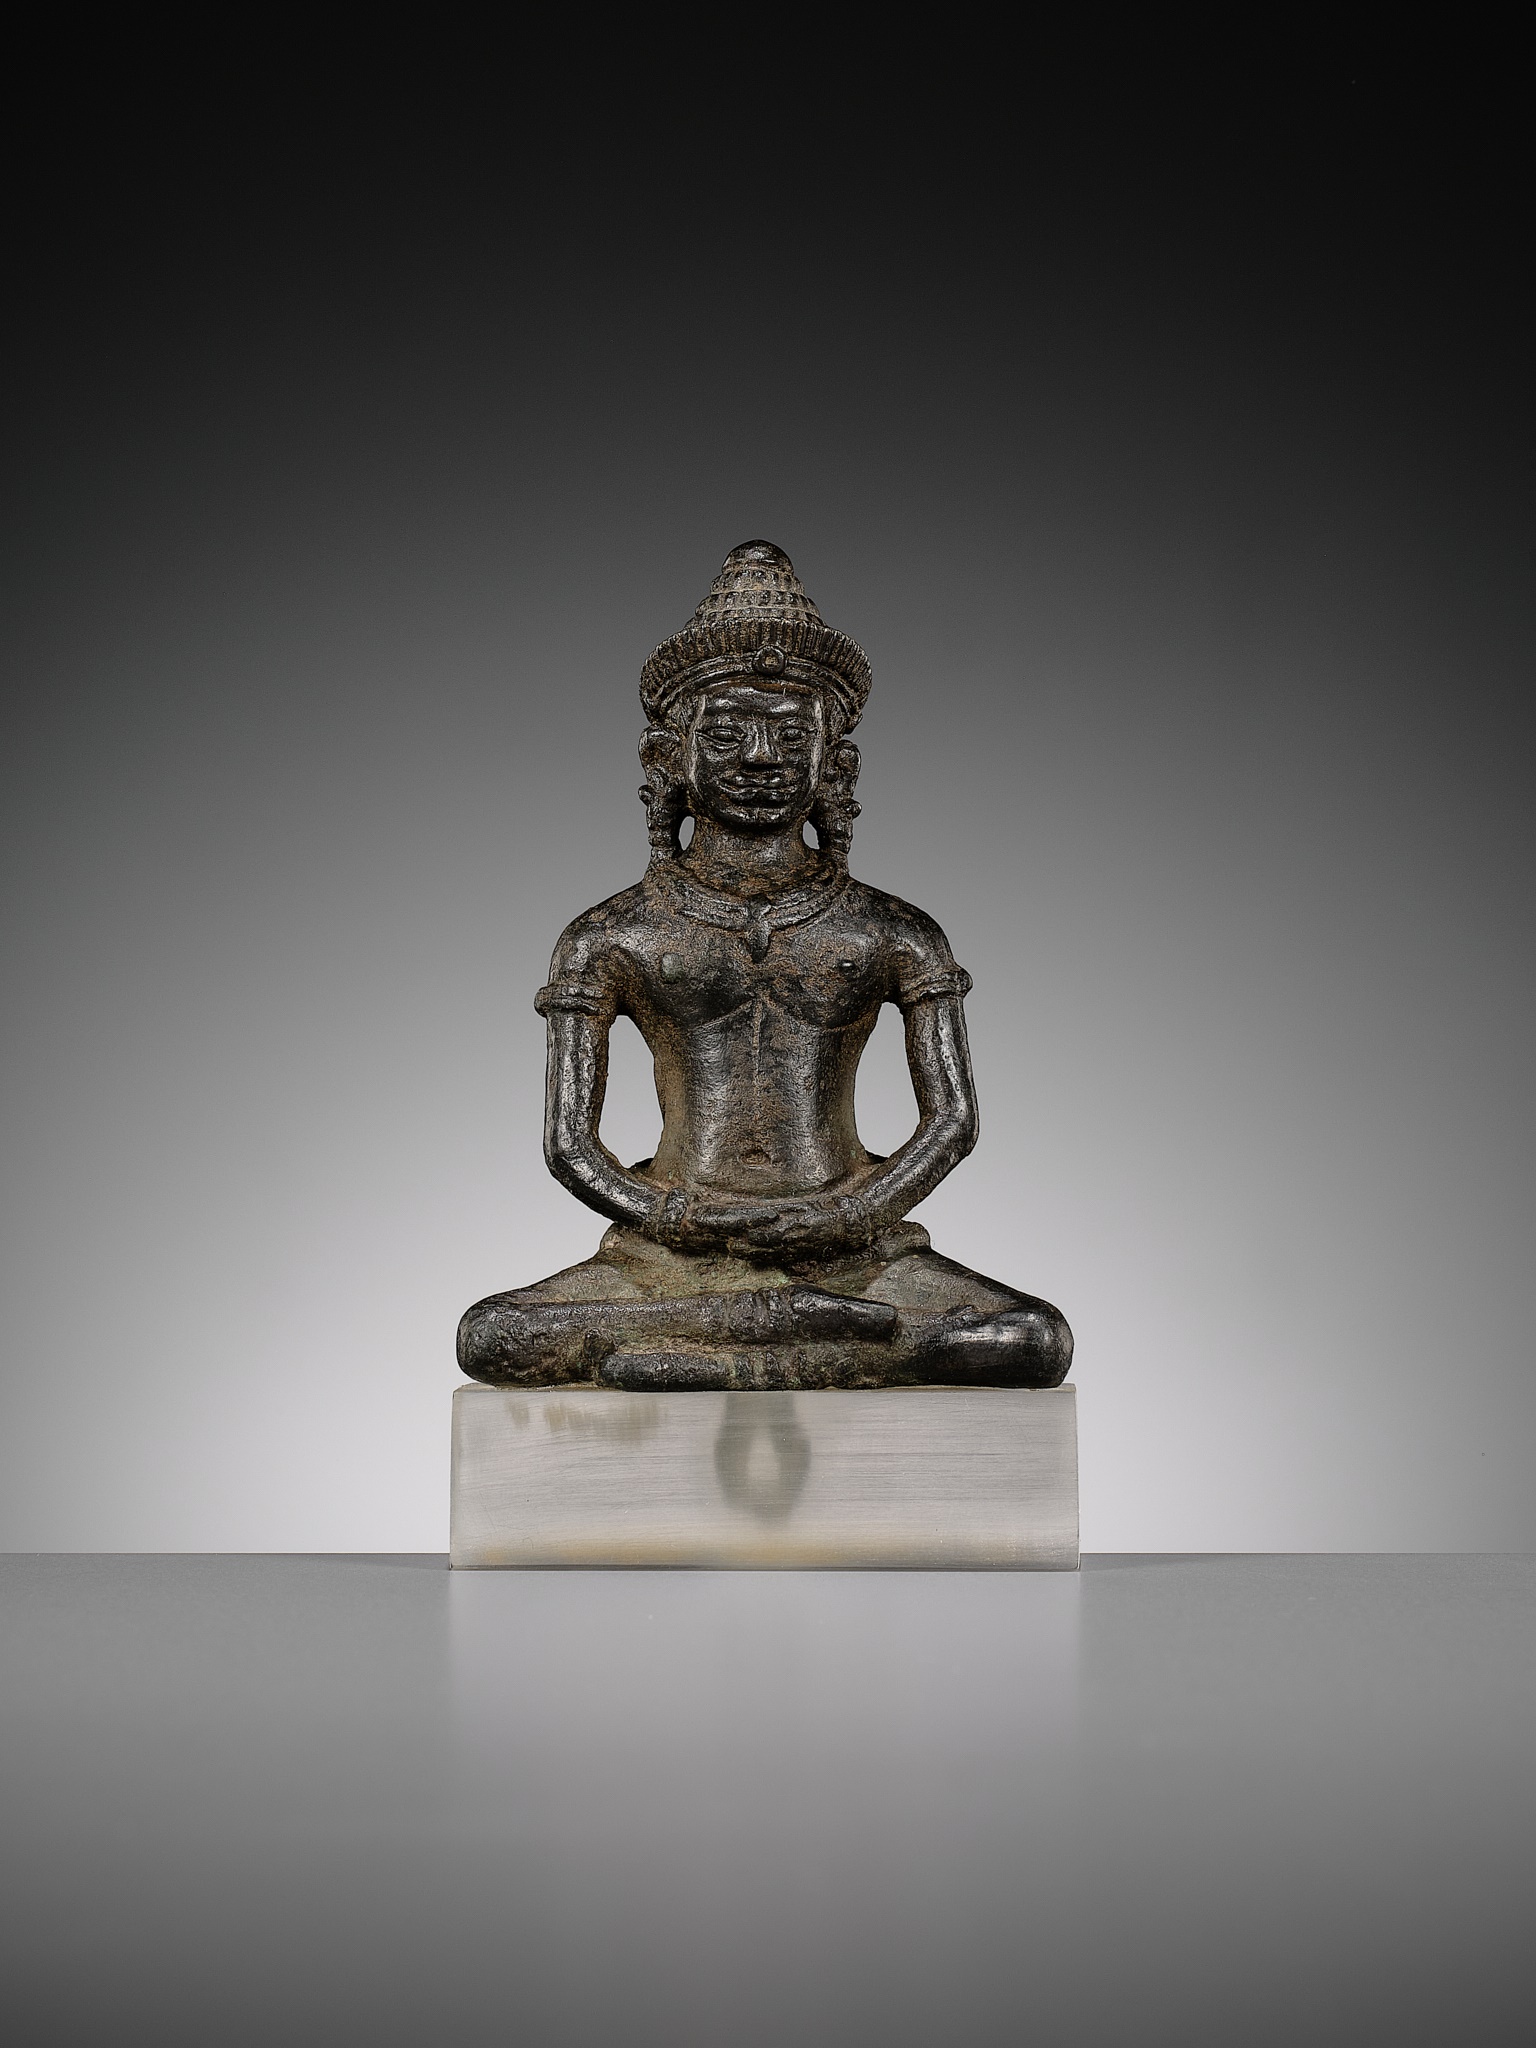 A BRONZE FIGURE OF BUDDHA, ANGKOR PERIOD, KHMER EMPIRE, 12TH CENTURY - Image 3 of 9